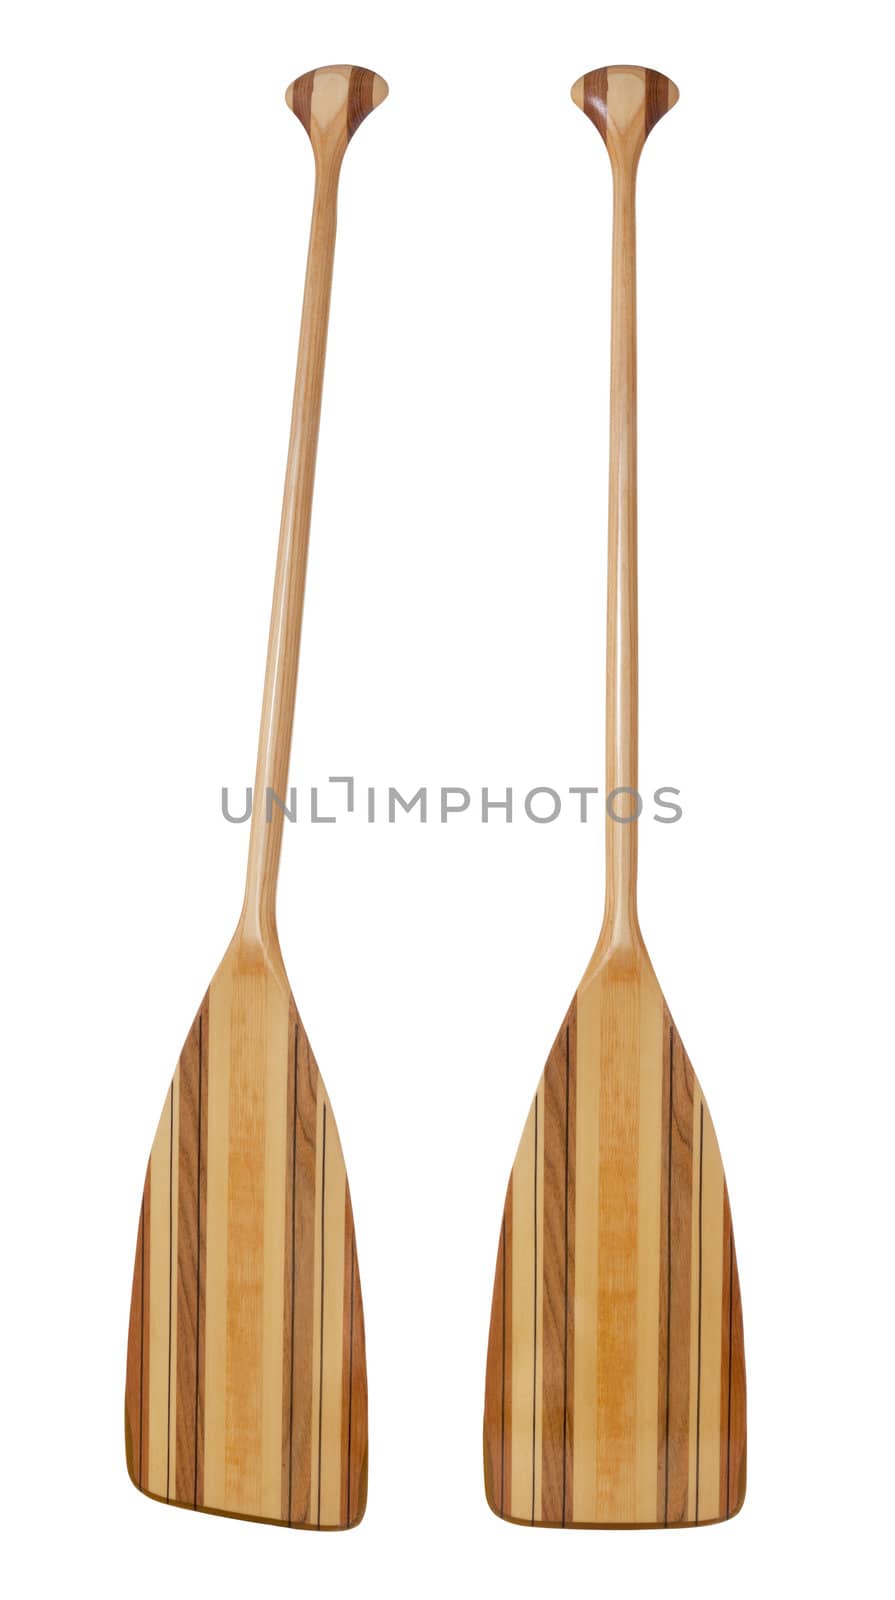 bent shaft wood  canoe paddle by PixelsAway